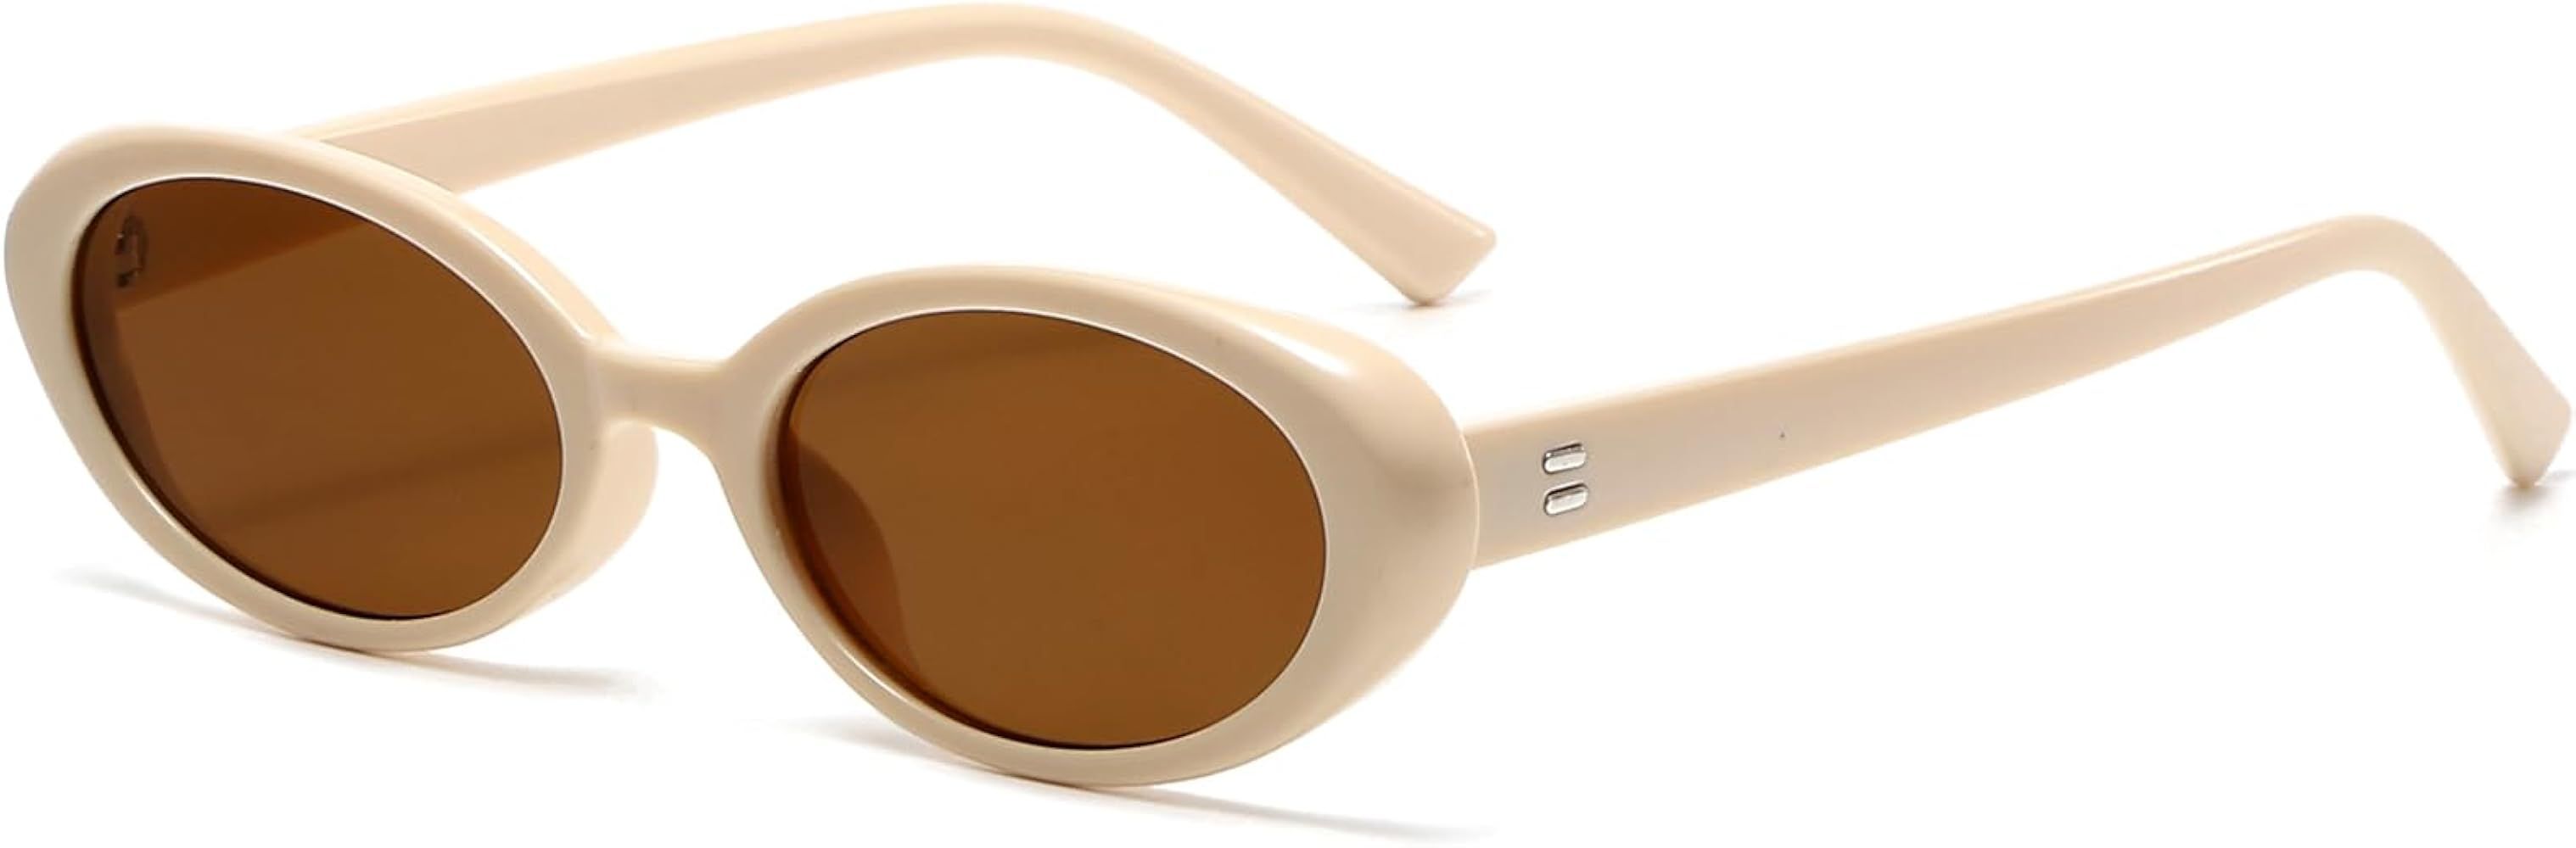 Retro Oval Sunglasses for Women Men Fashion Small Oval Frame Sun Glasses 90s Vintage Style Shades | Amazon (US)